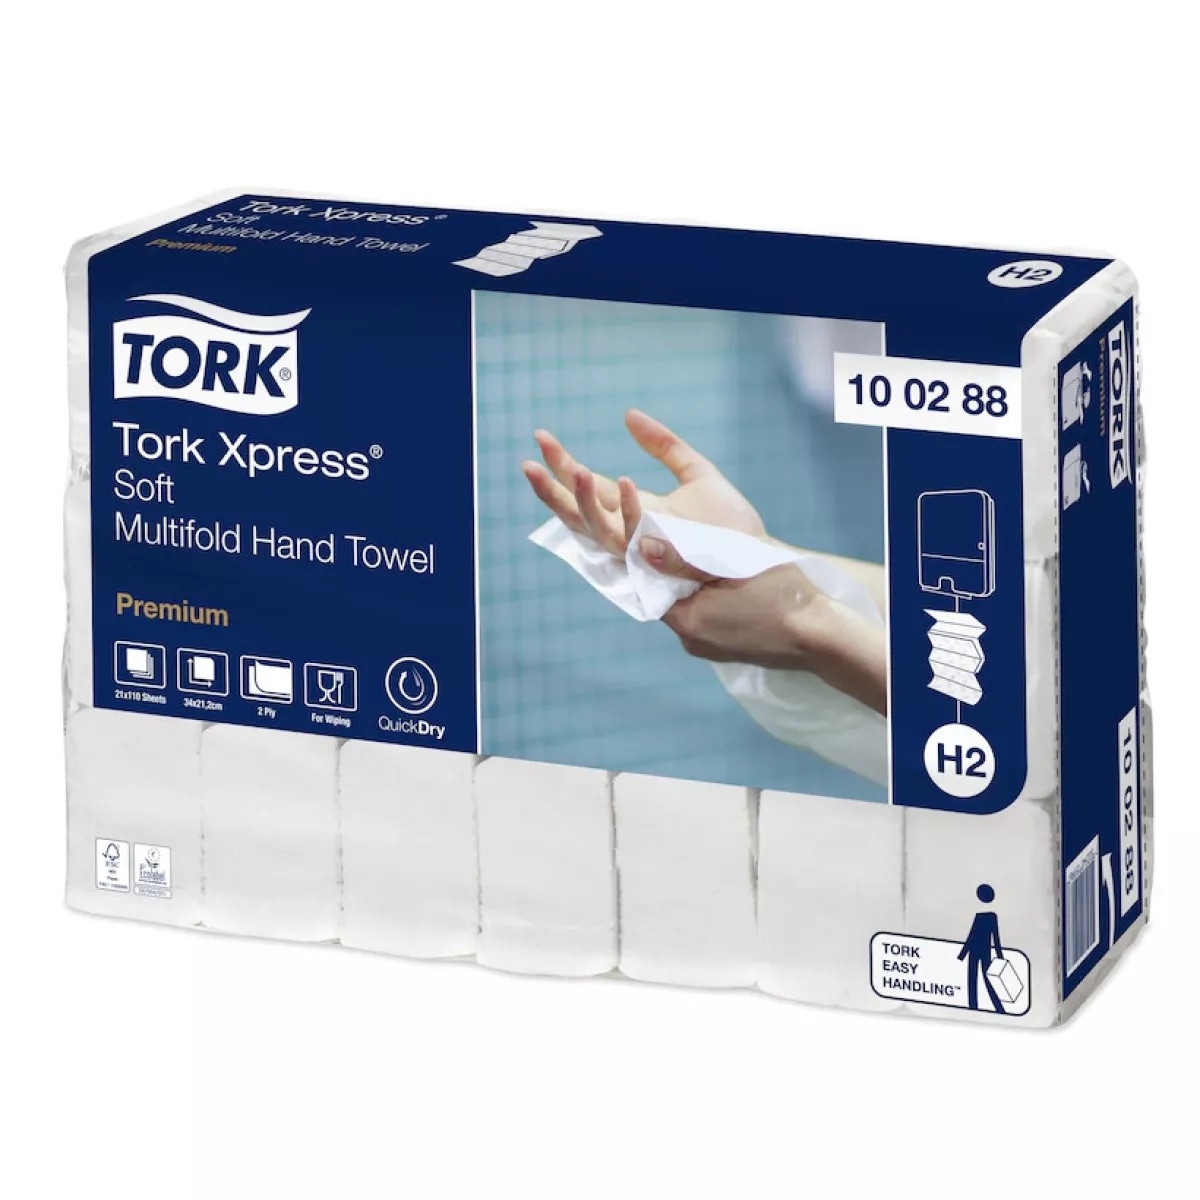 #1 - Tork Xpress Soft Multifold Hand Towel H2, håndklædeark, 2310 ark